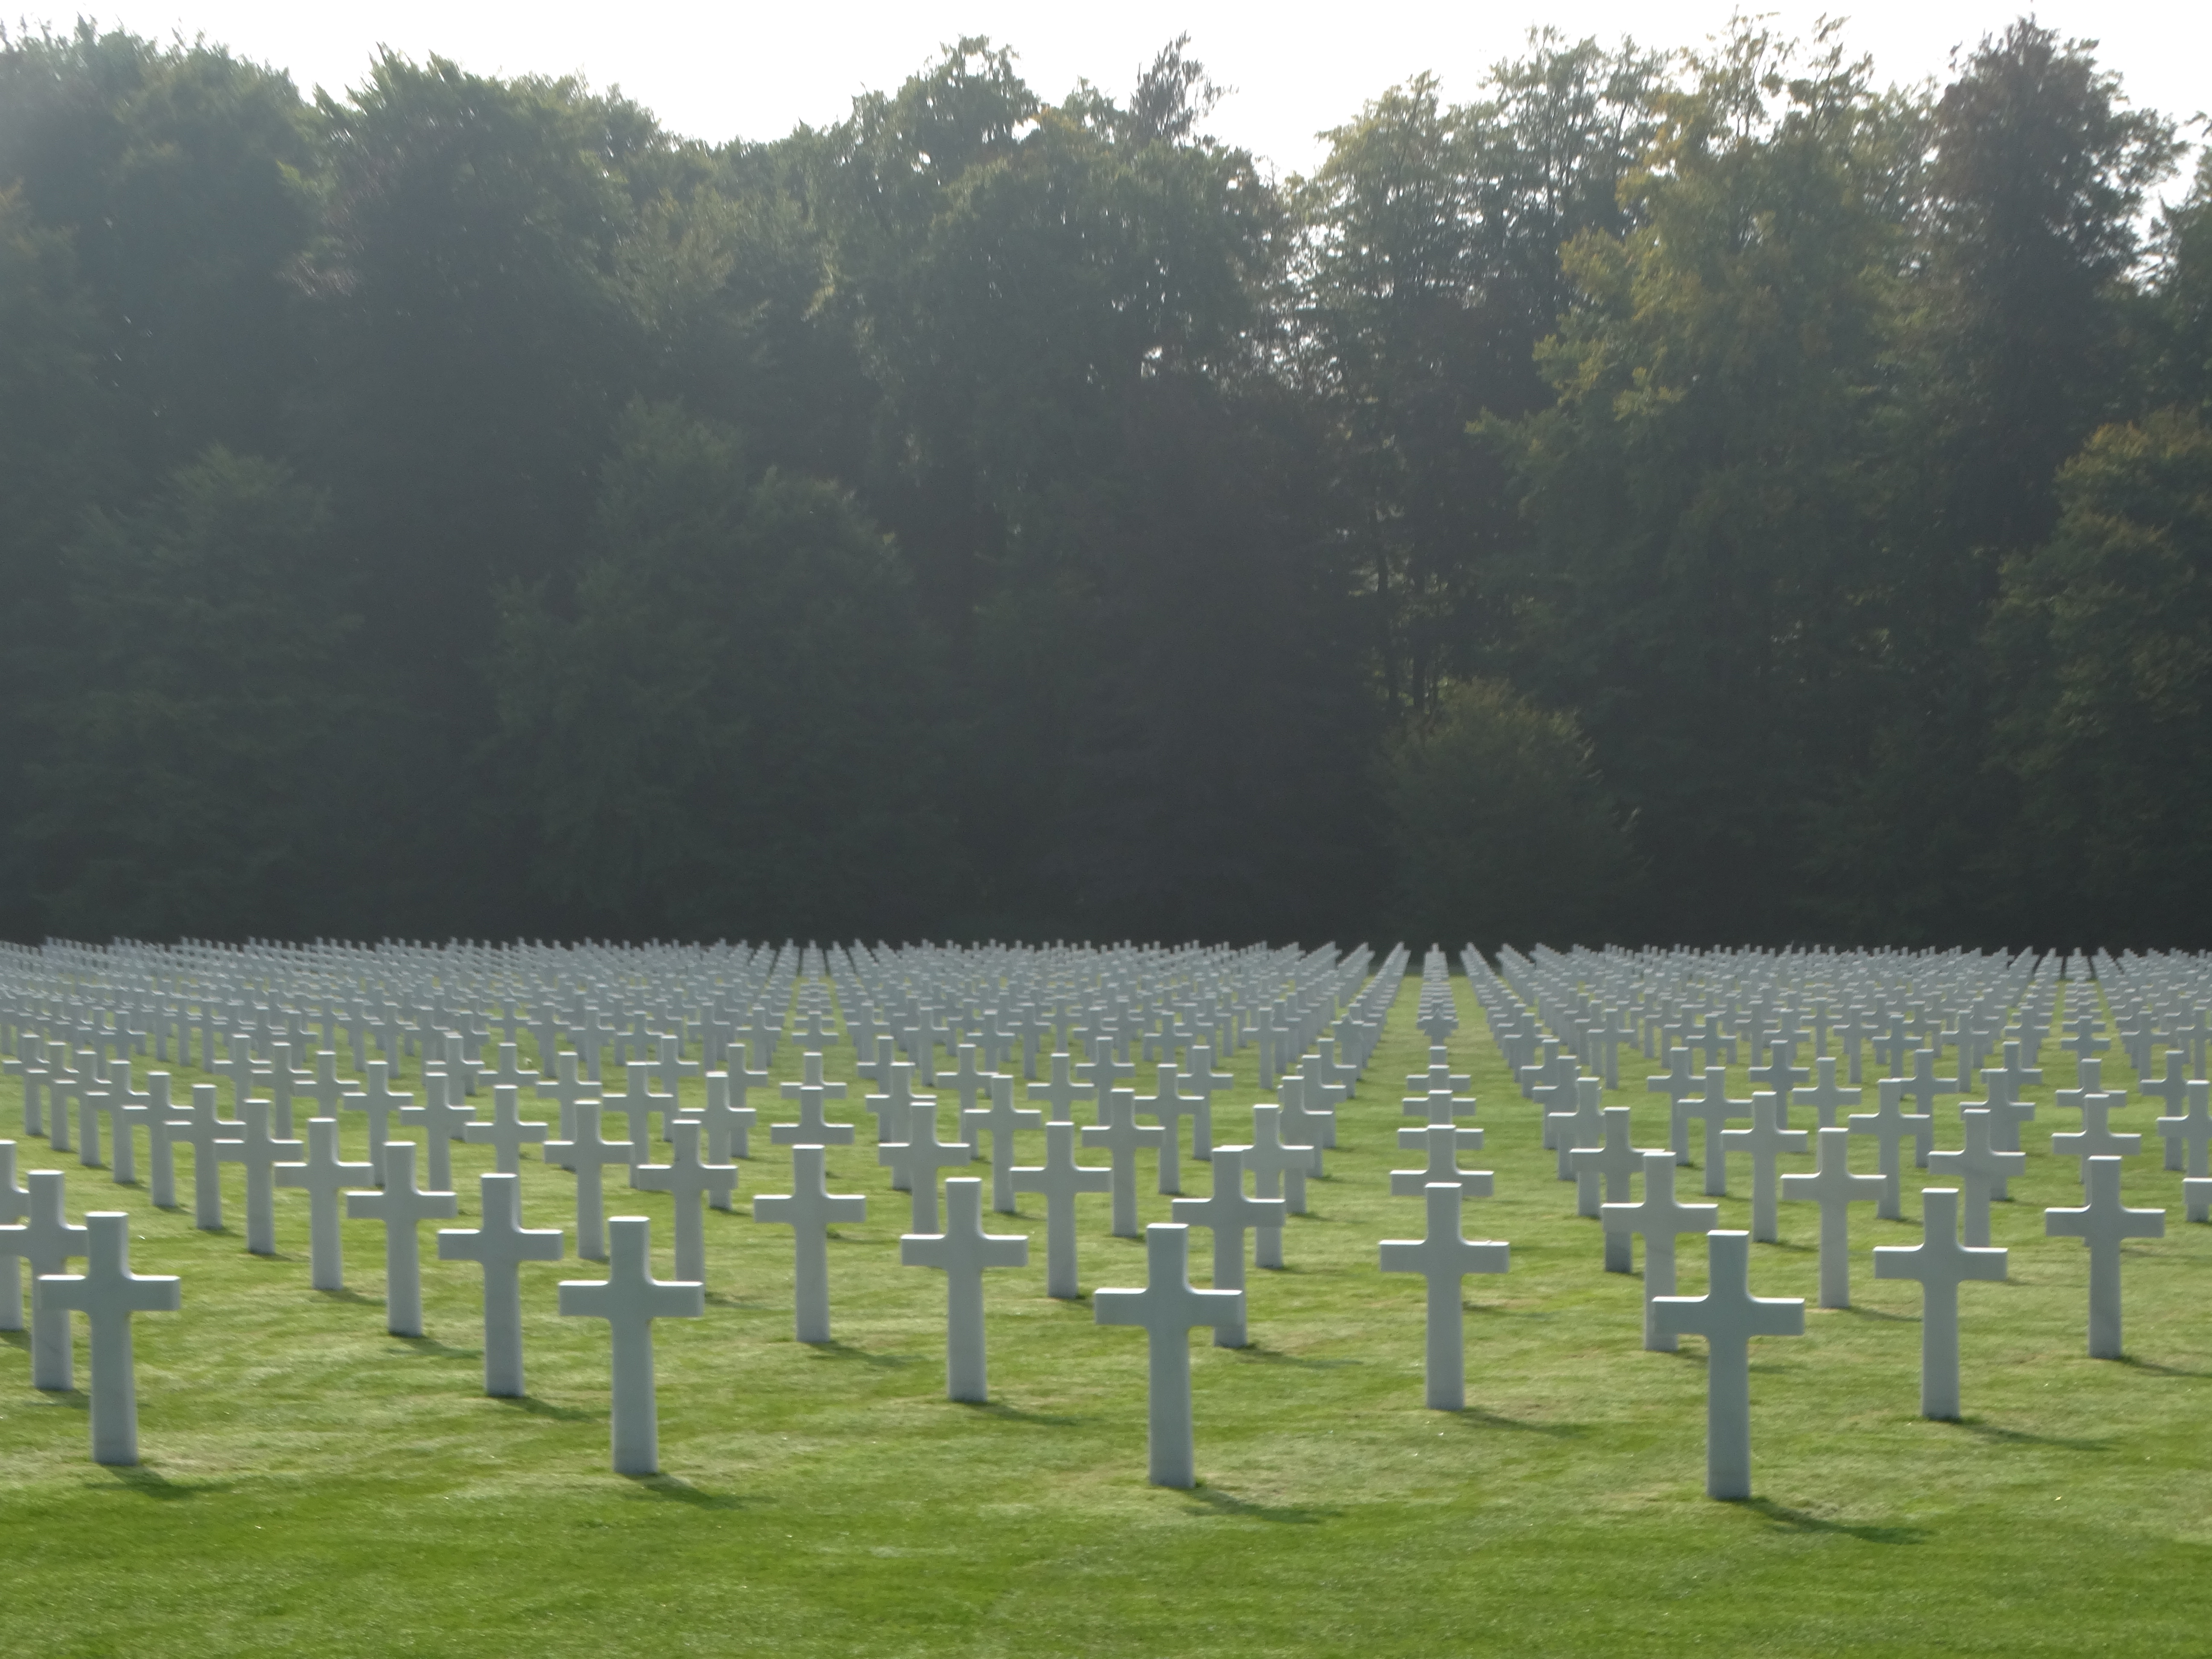 2-americ5a1ko-vojac5a1ko-pokopalic5a1c48de-iz-2-sv-vojne-v-luksemburgu